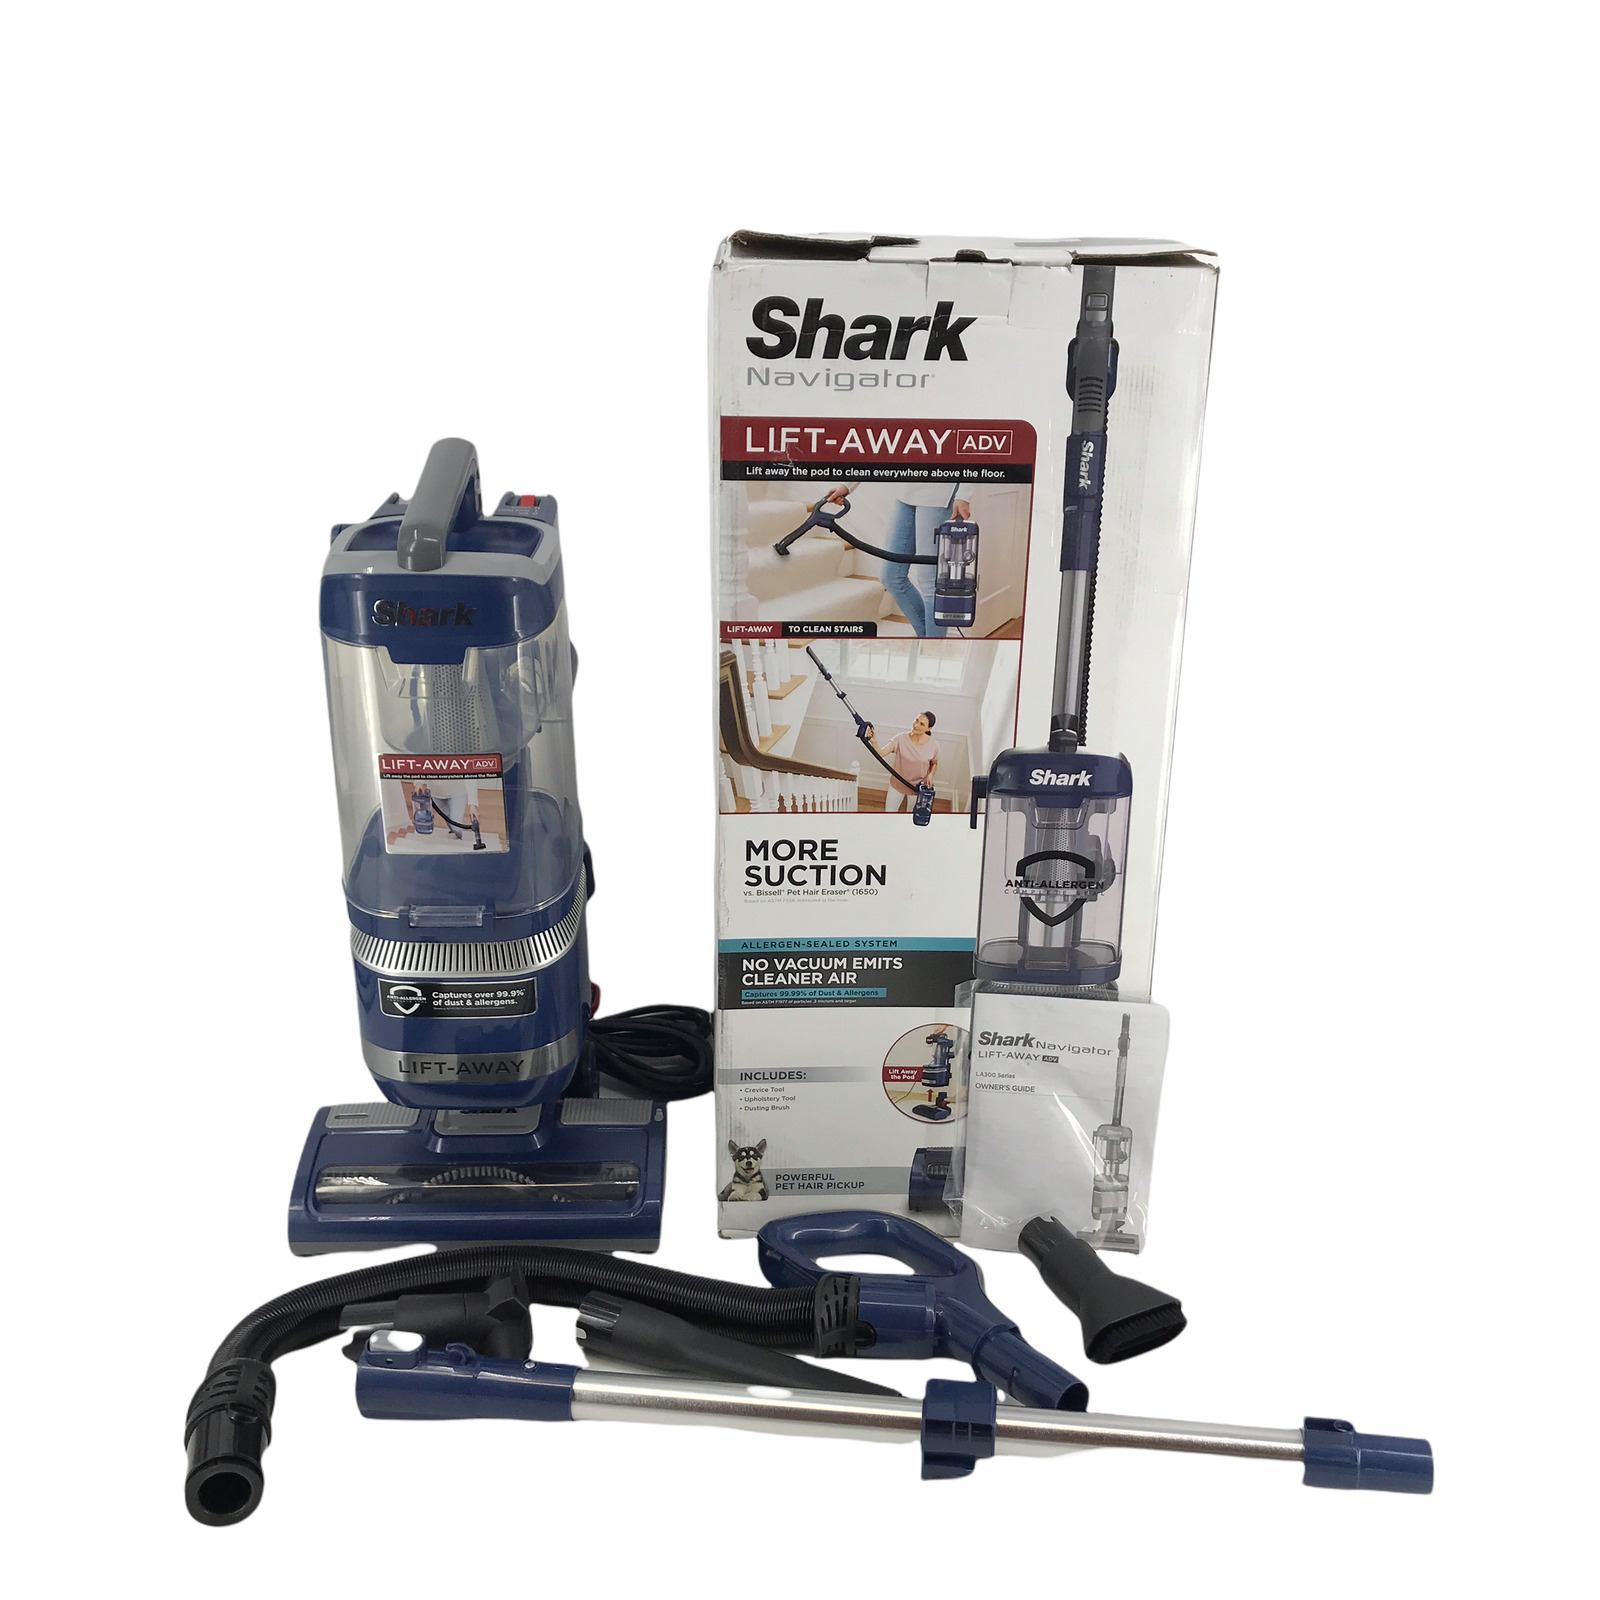 Shark Navigator LA301 Lift-Away ADV Upright Vacuum Cleaner Blue #U0053